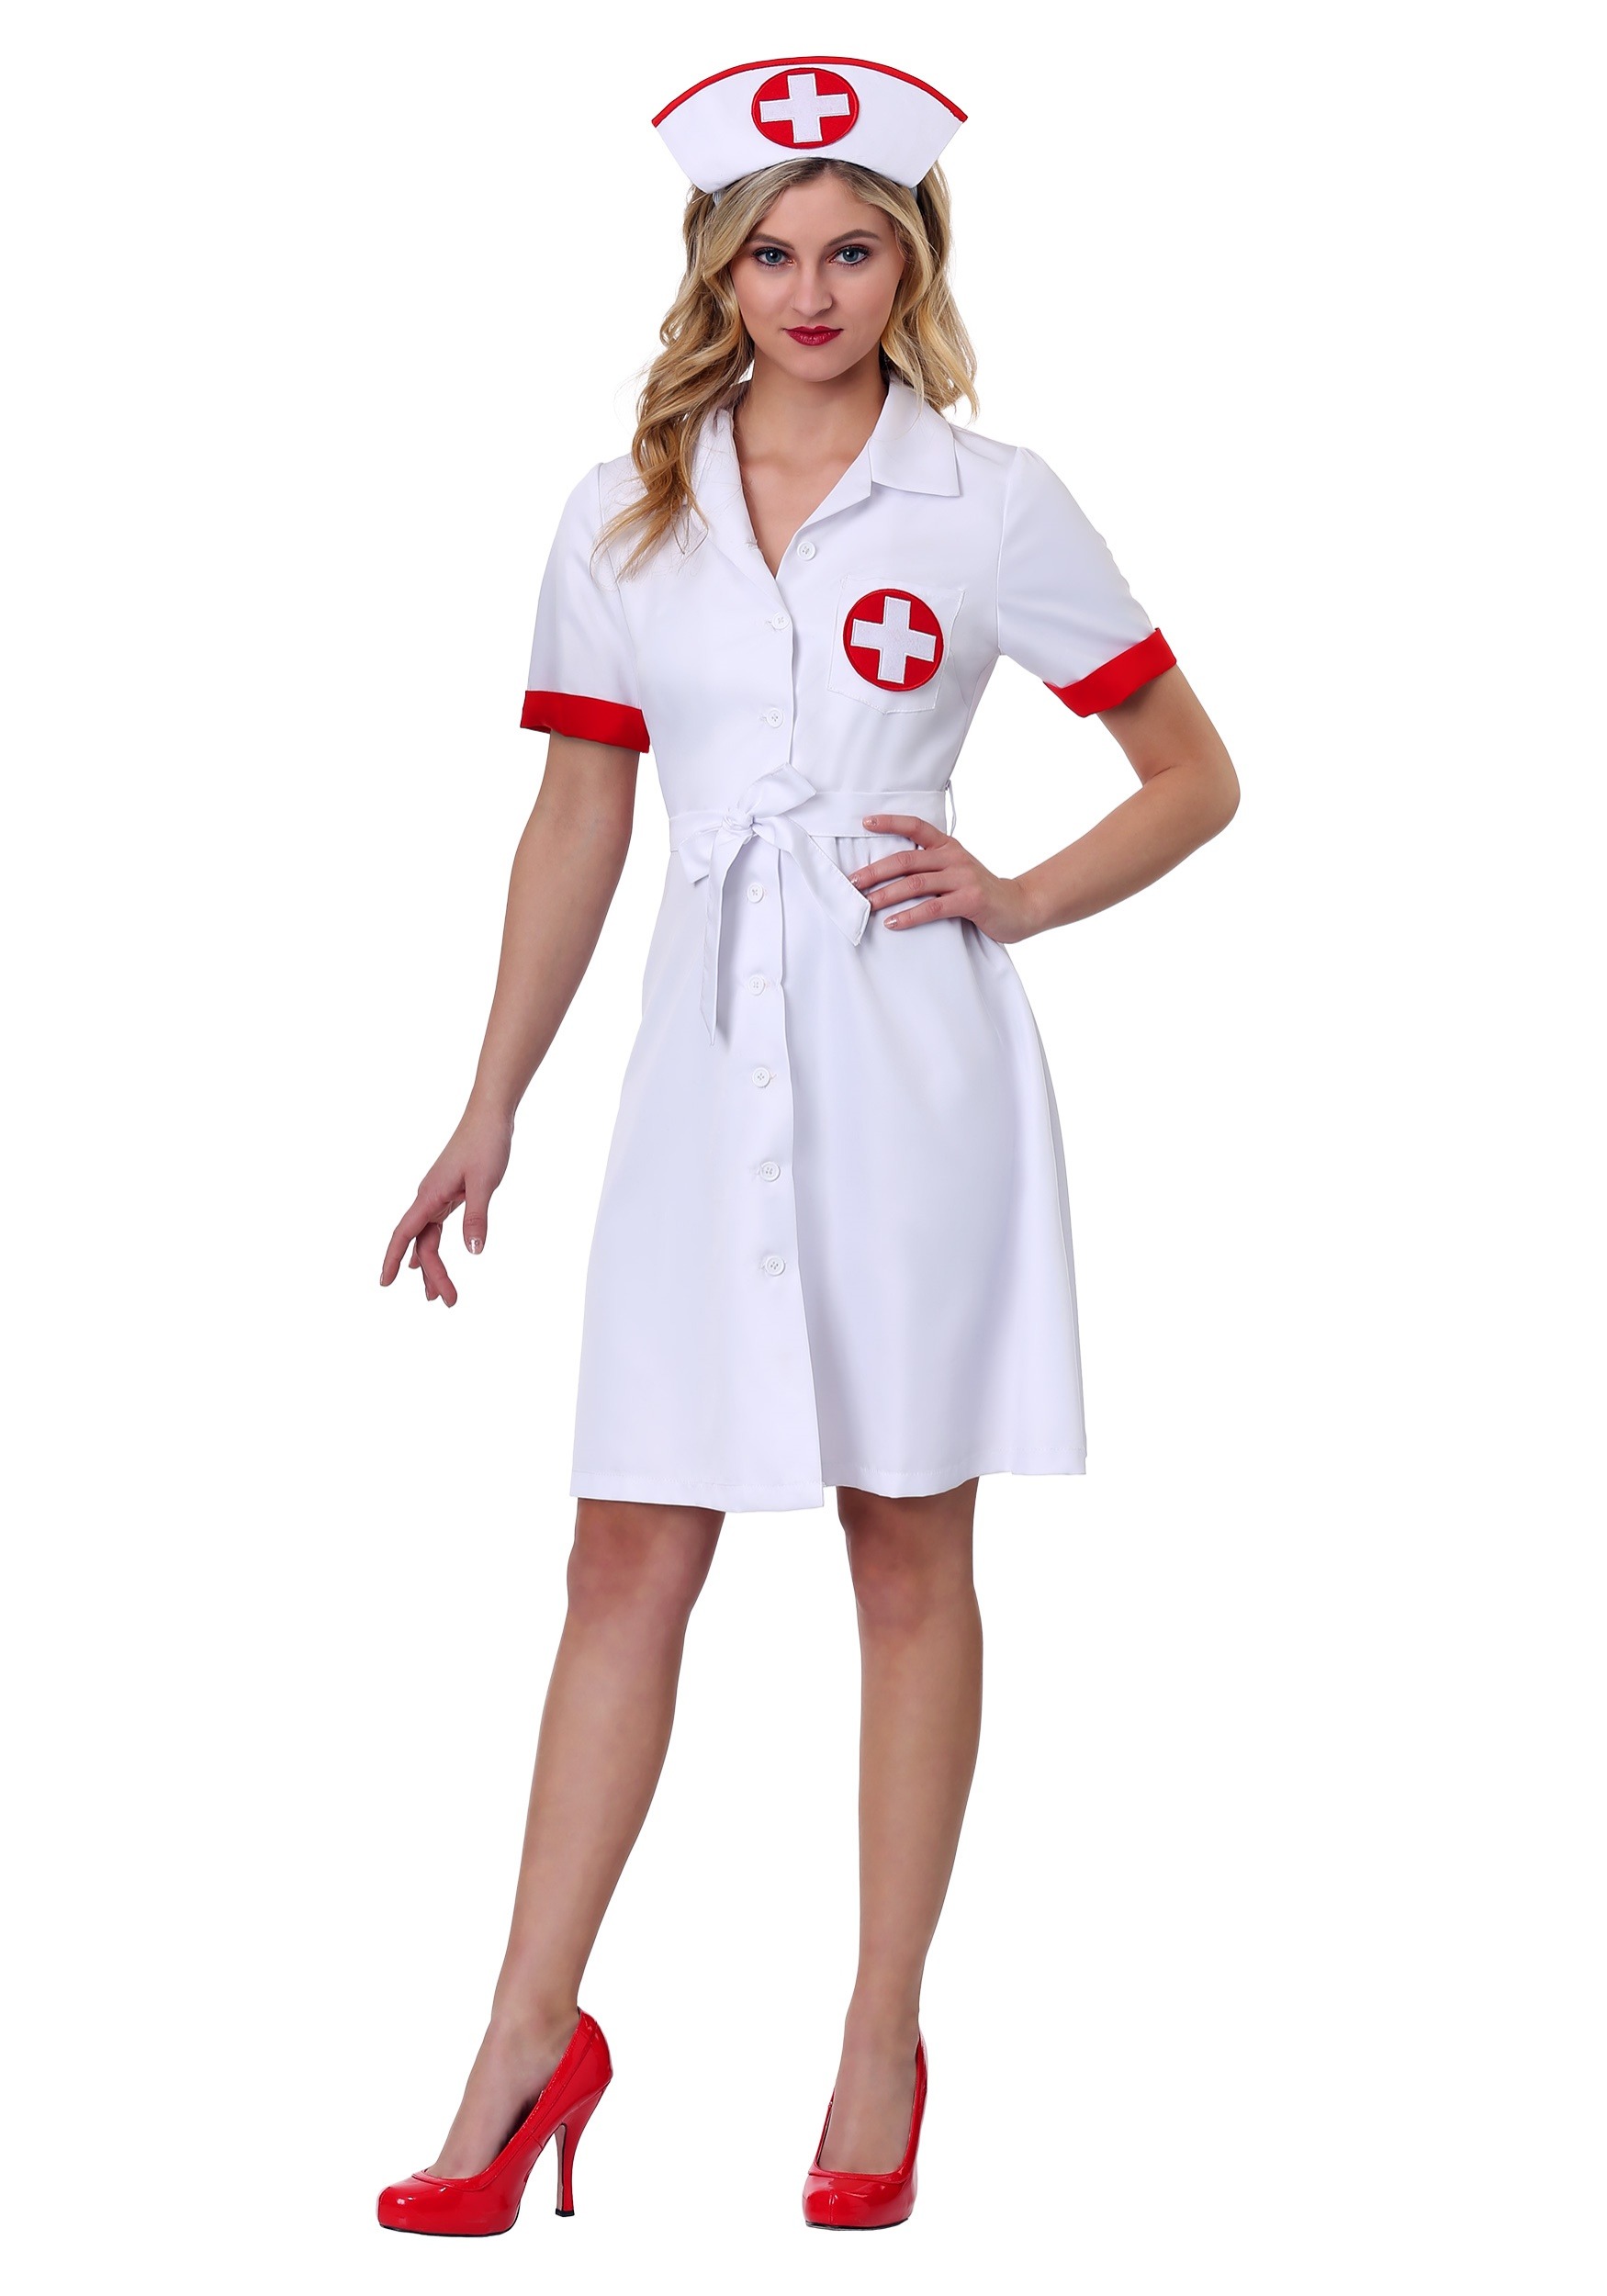 Stitch Me Up Nurse Fancy Dress Costume For Women